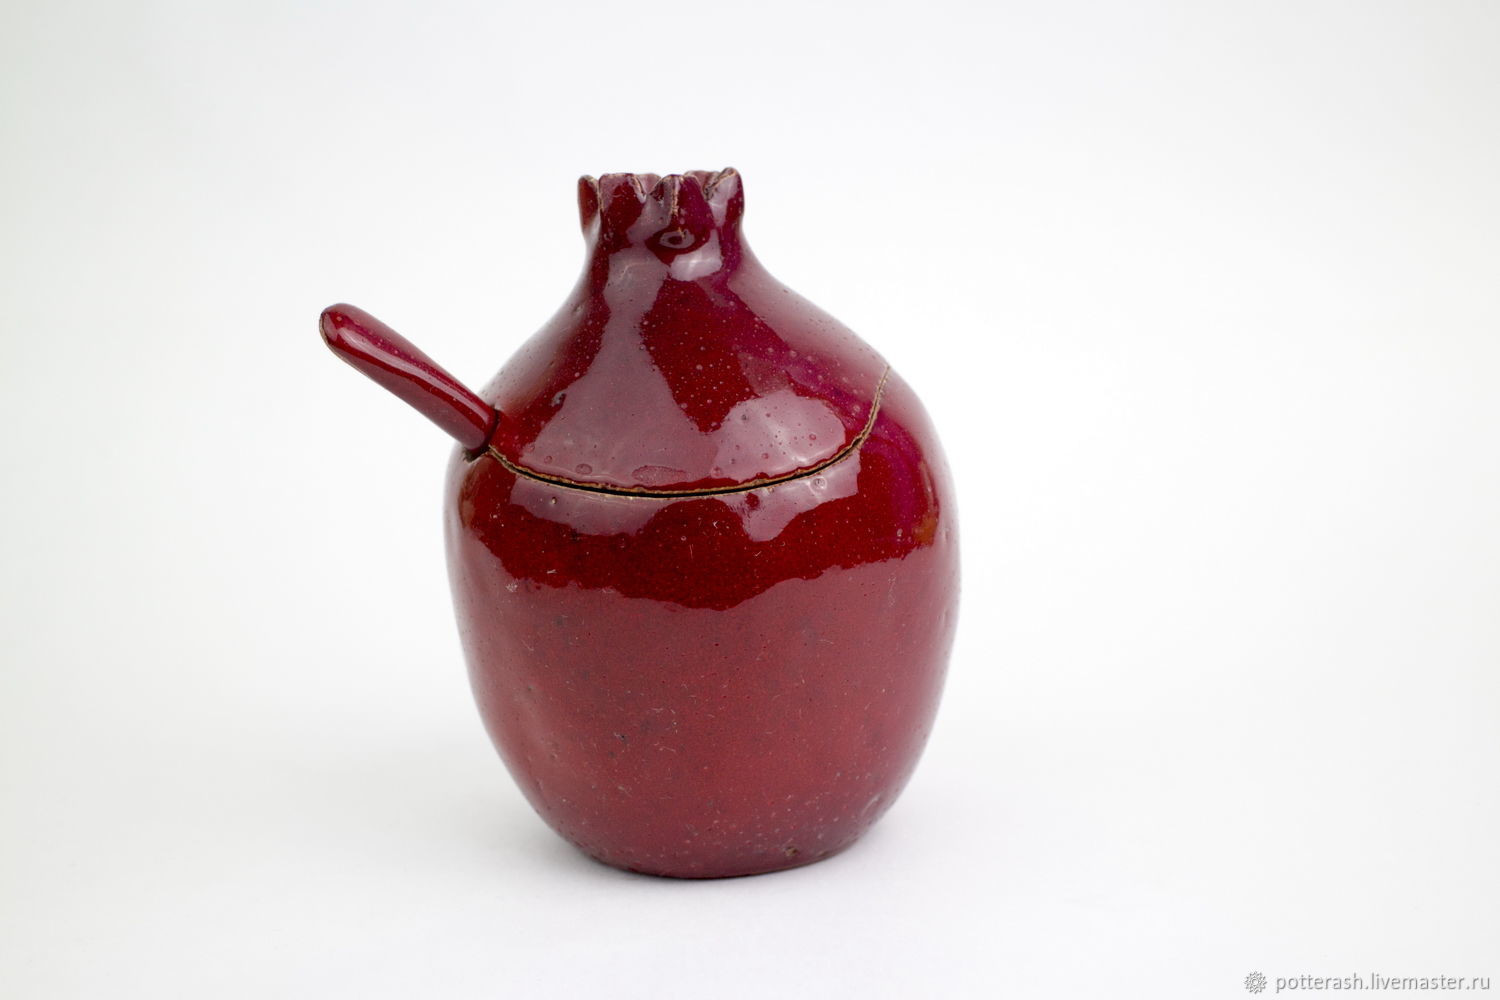 16 Wonderful Purple Ceramic Vase 2024 free download purple ceramic vase of pomegranate sugar bowl ceramic red handmade sugar bowl shop with red ceramic sugar bowl in the form of a pomegranate